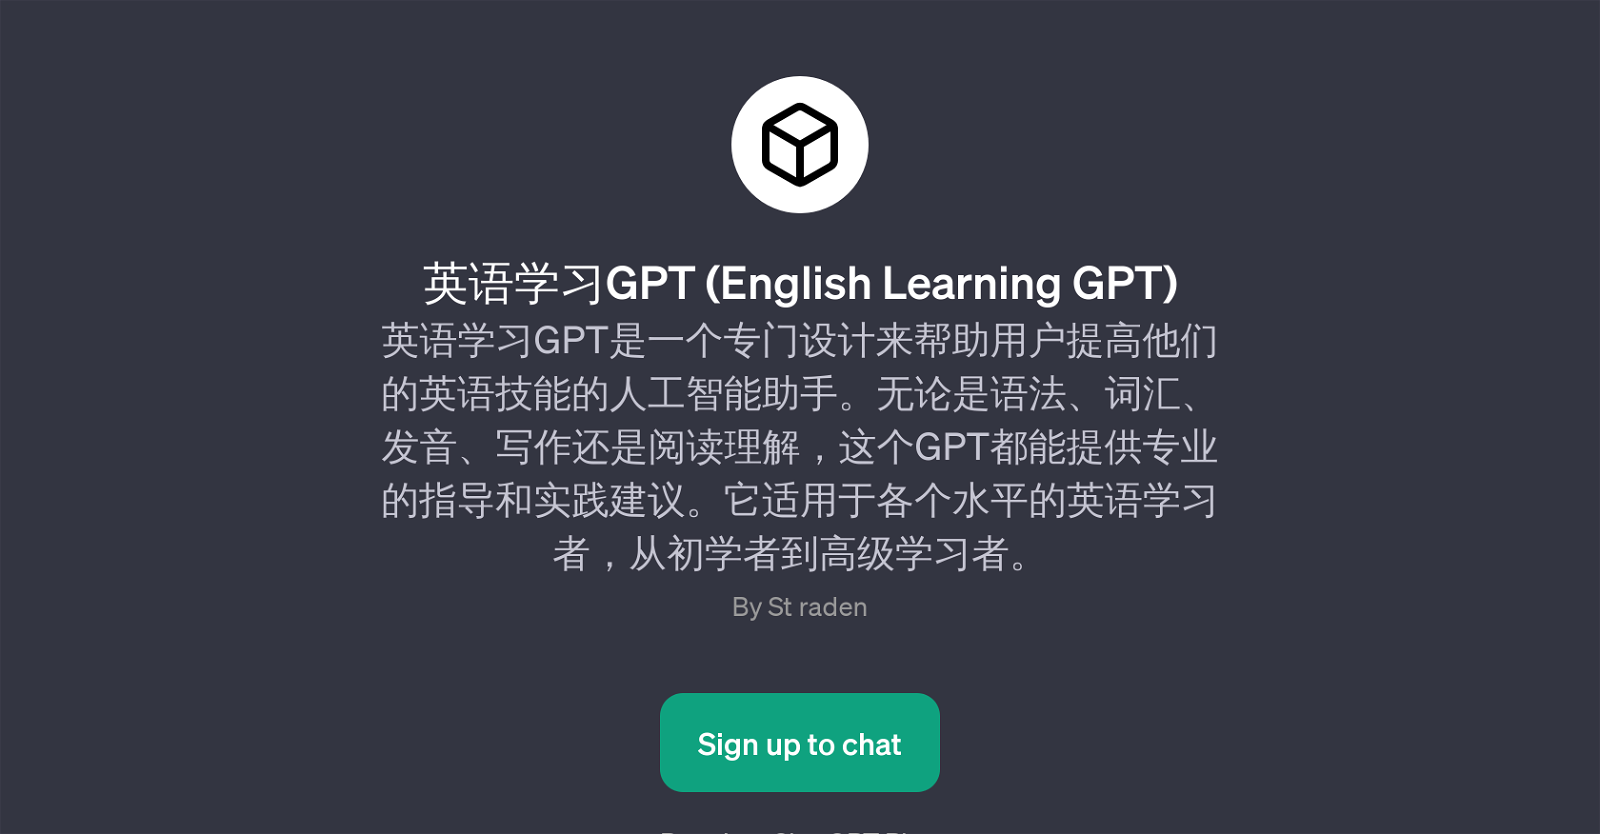 GPT (English Learning GPT) website